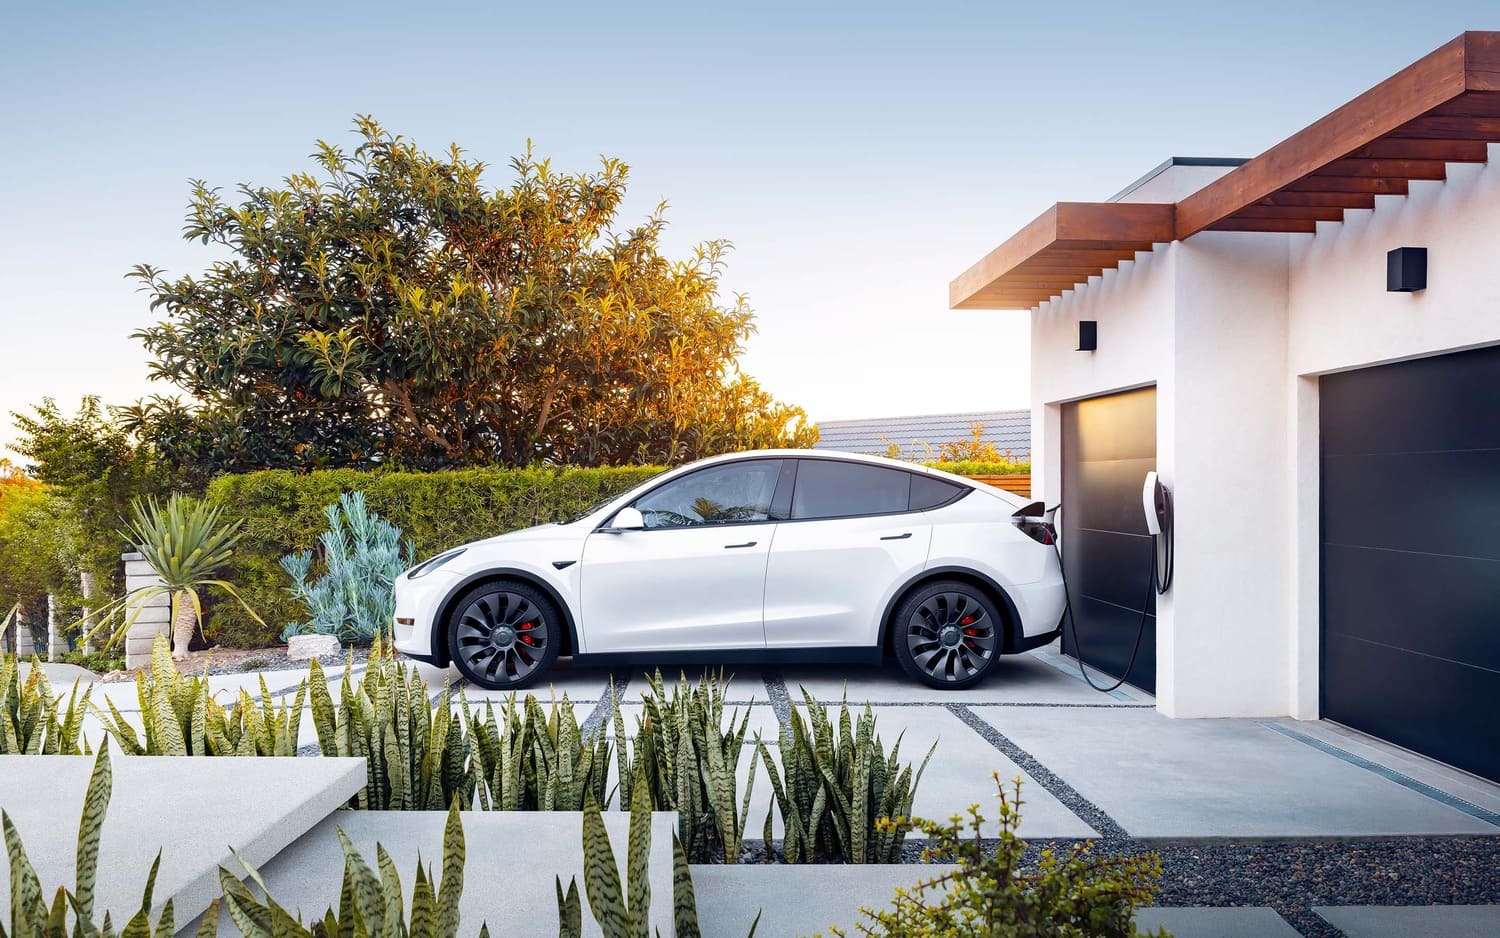 Borne de recharge Tesla (Wall Connector) V3 Neuf - Équipement auto